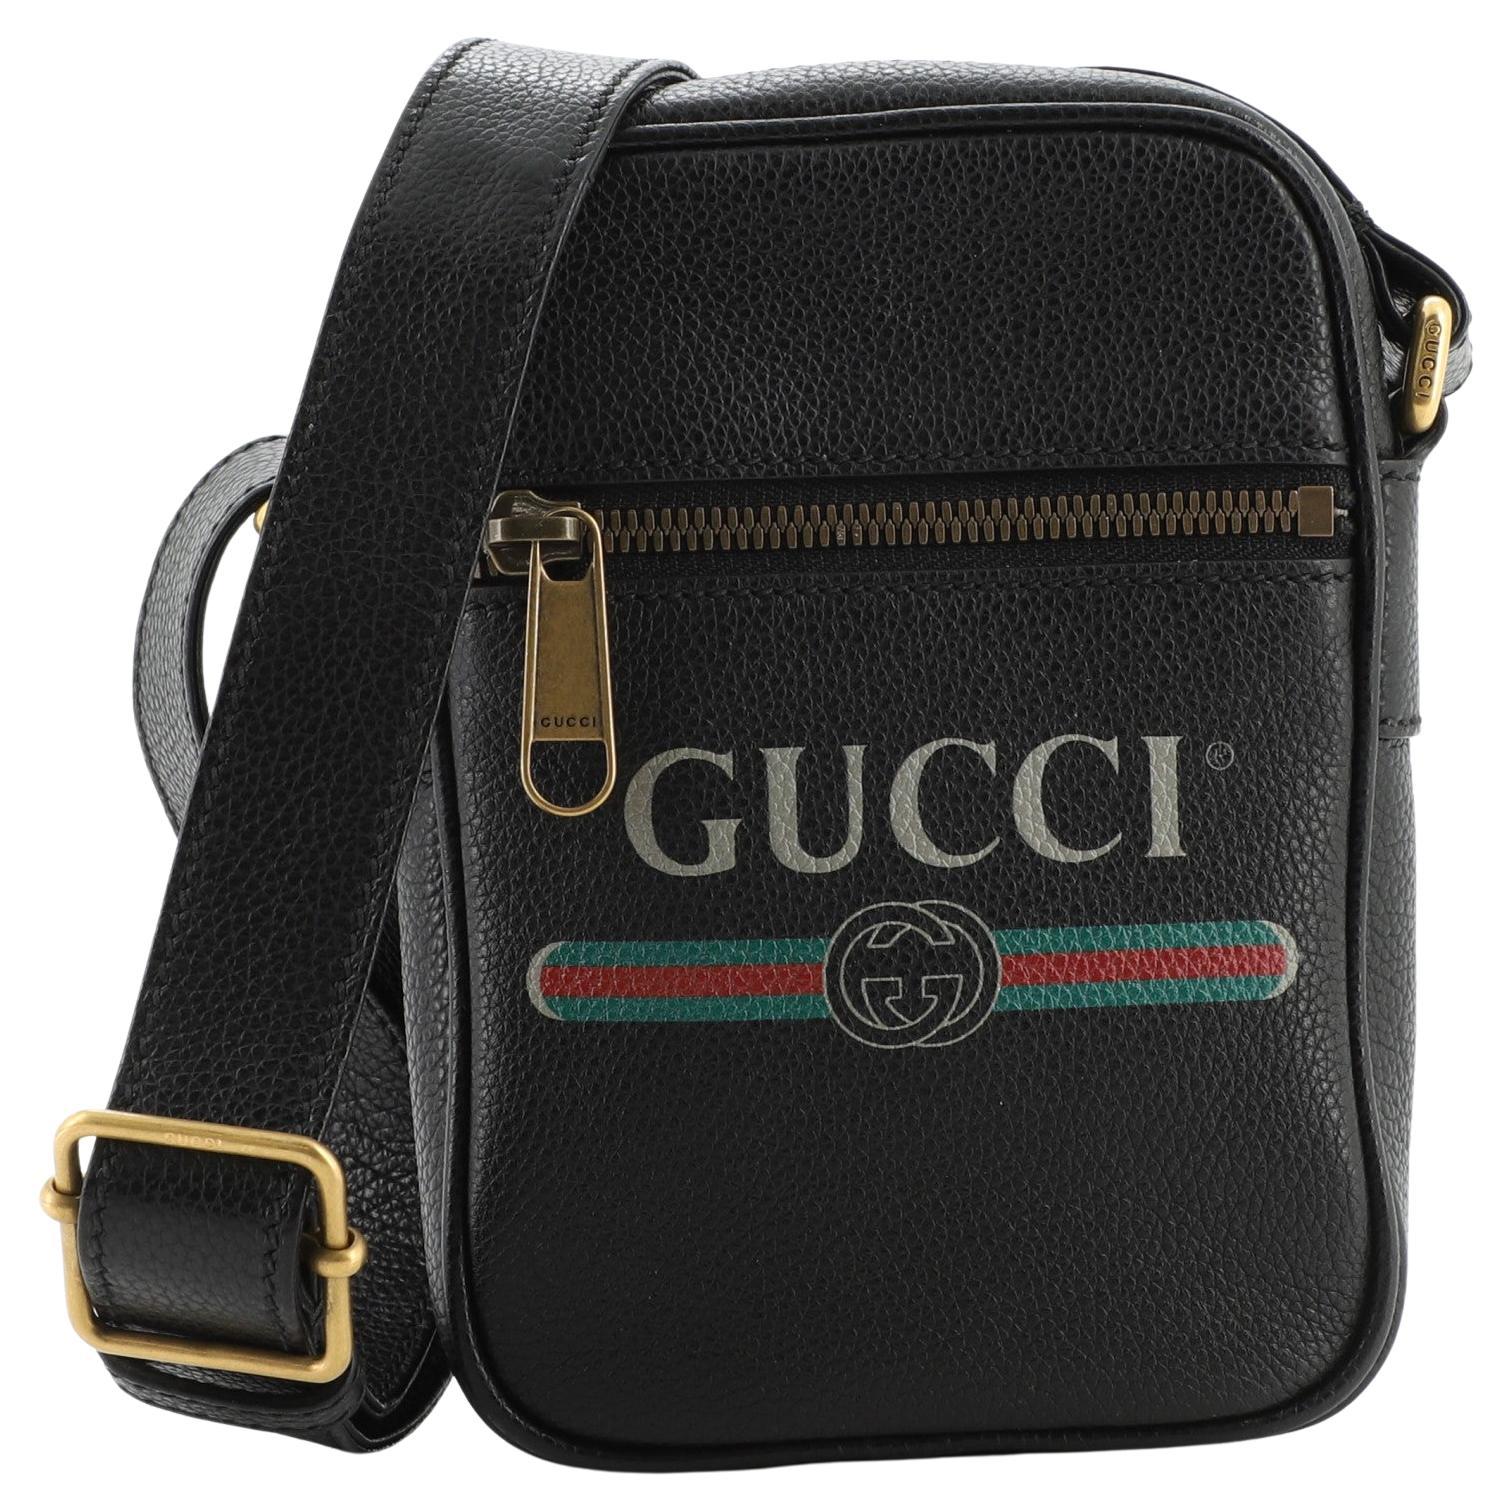 Gucci Logo - For Sale on 1stDibs | gucci metal logo, gucci symbol 